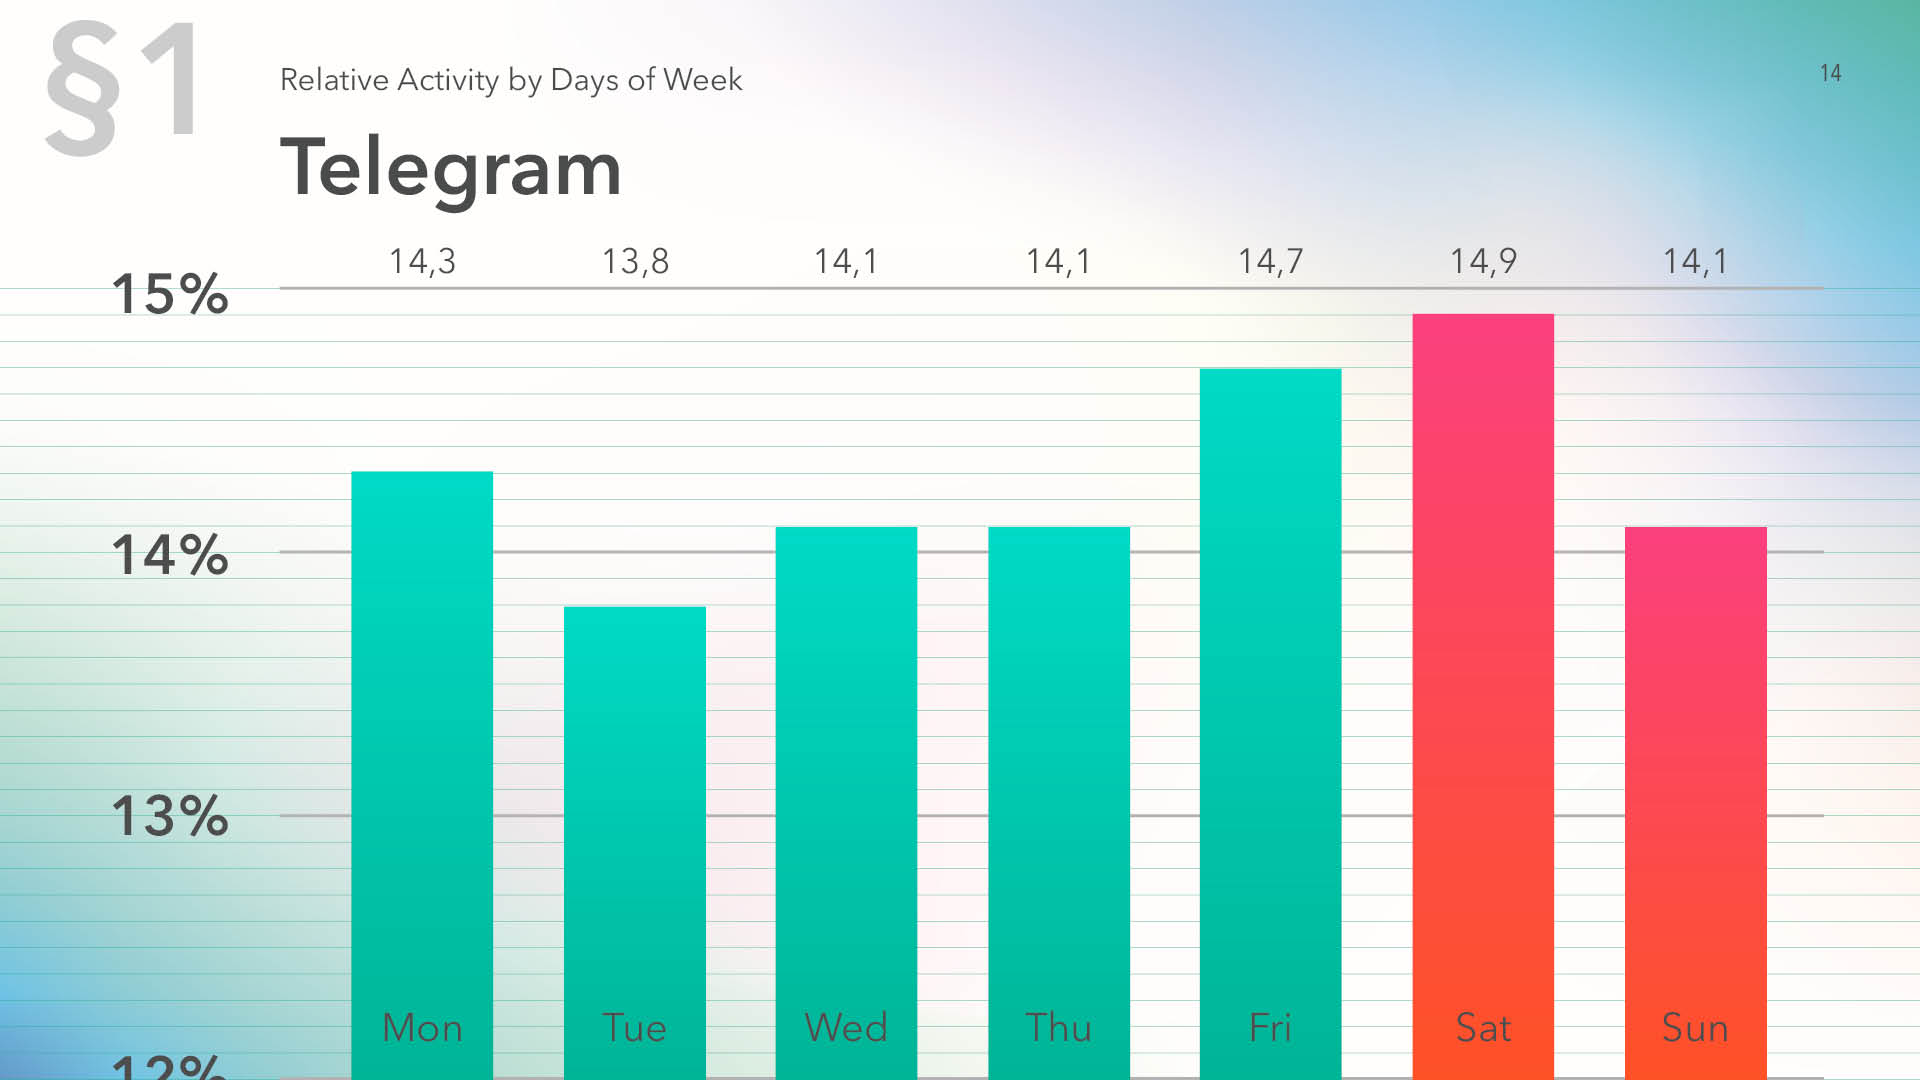 Telegram relative activity by days of week